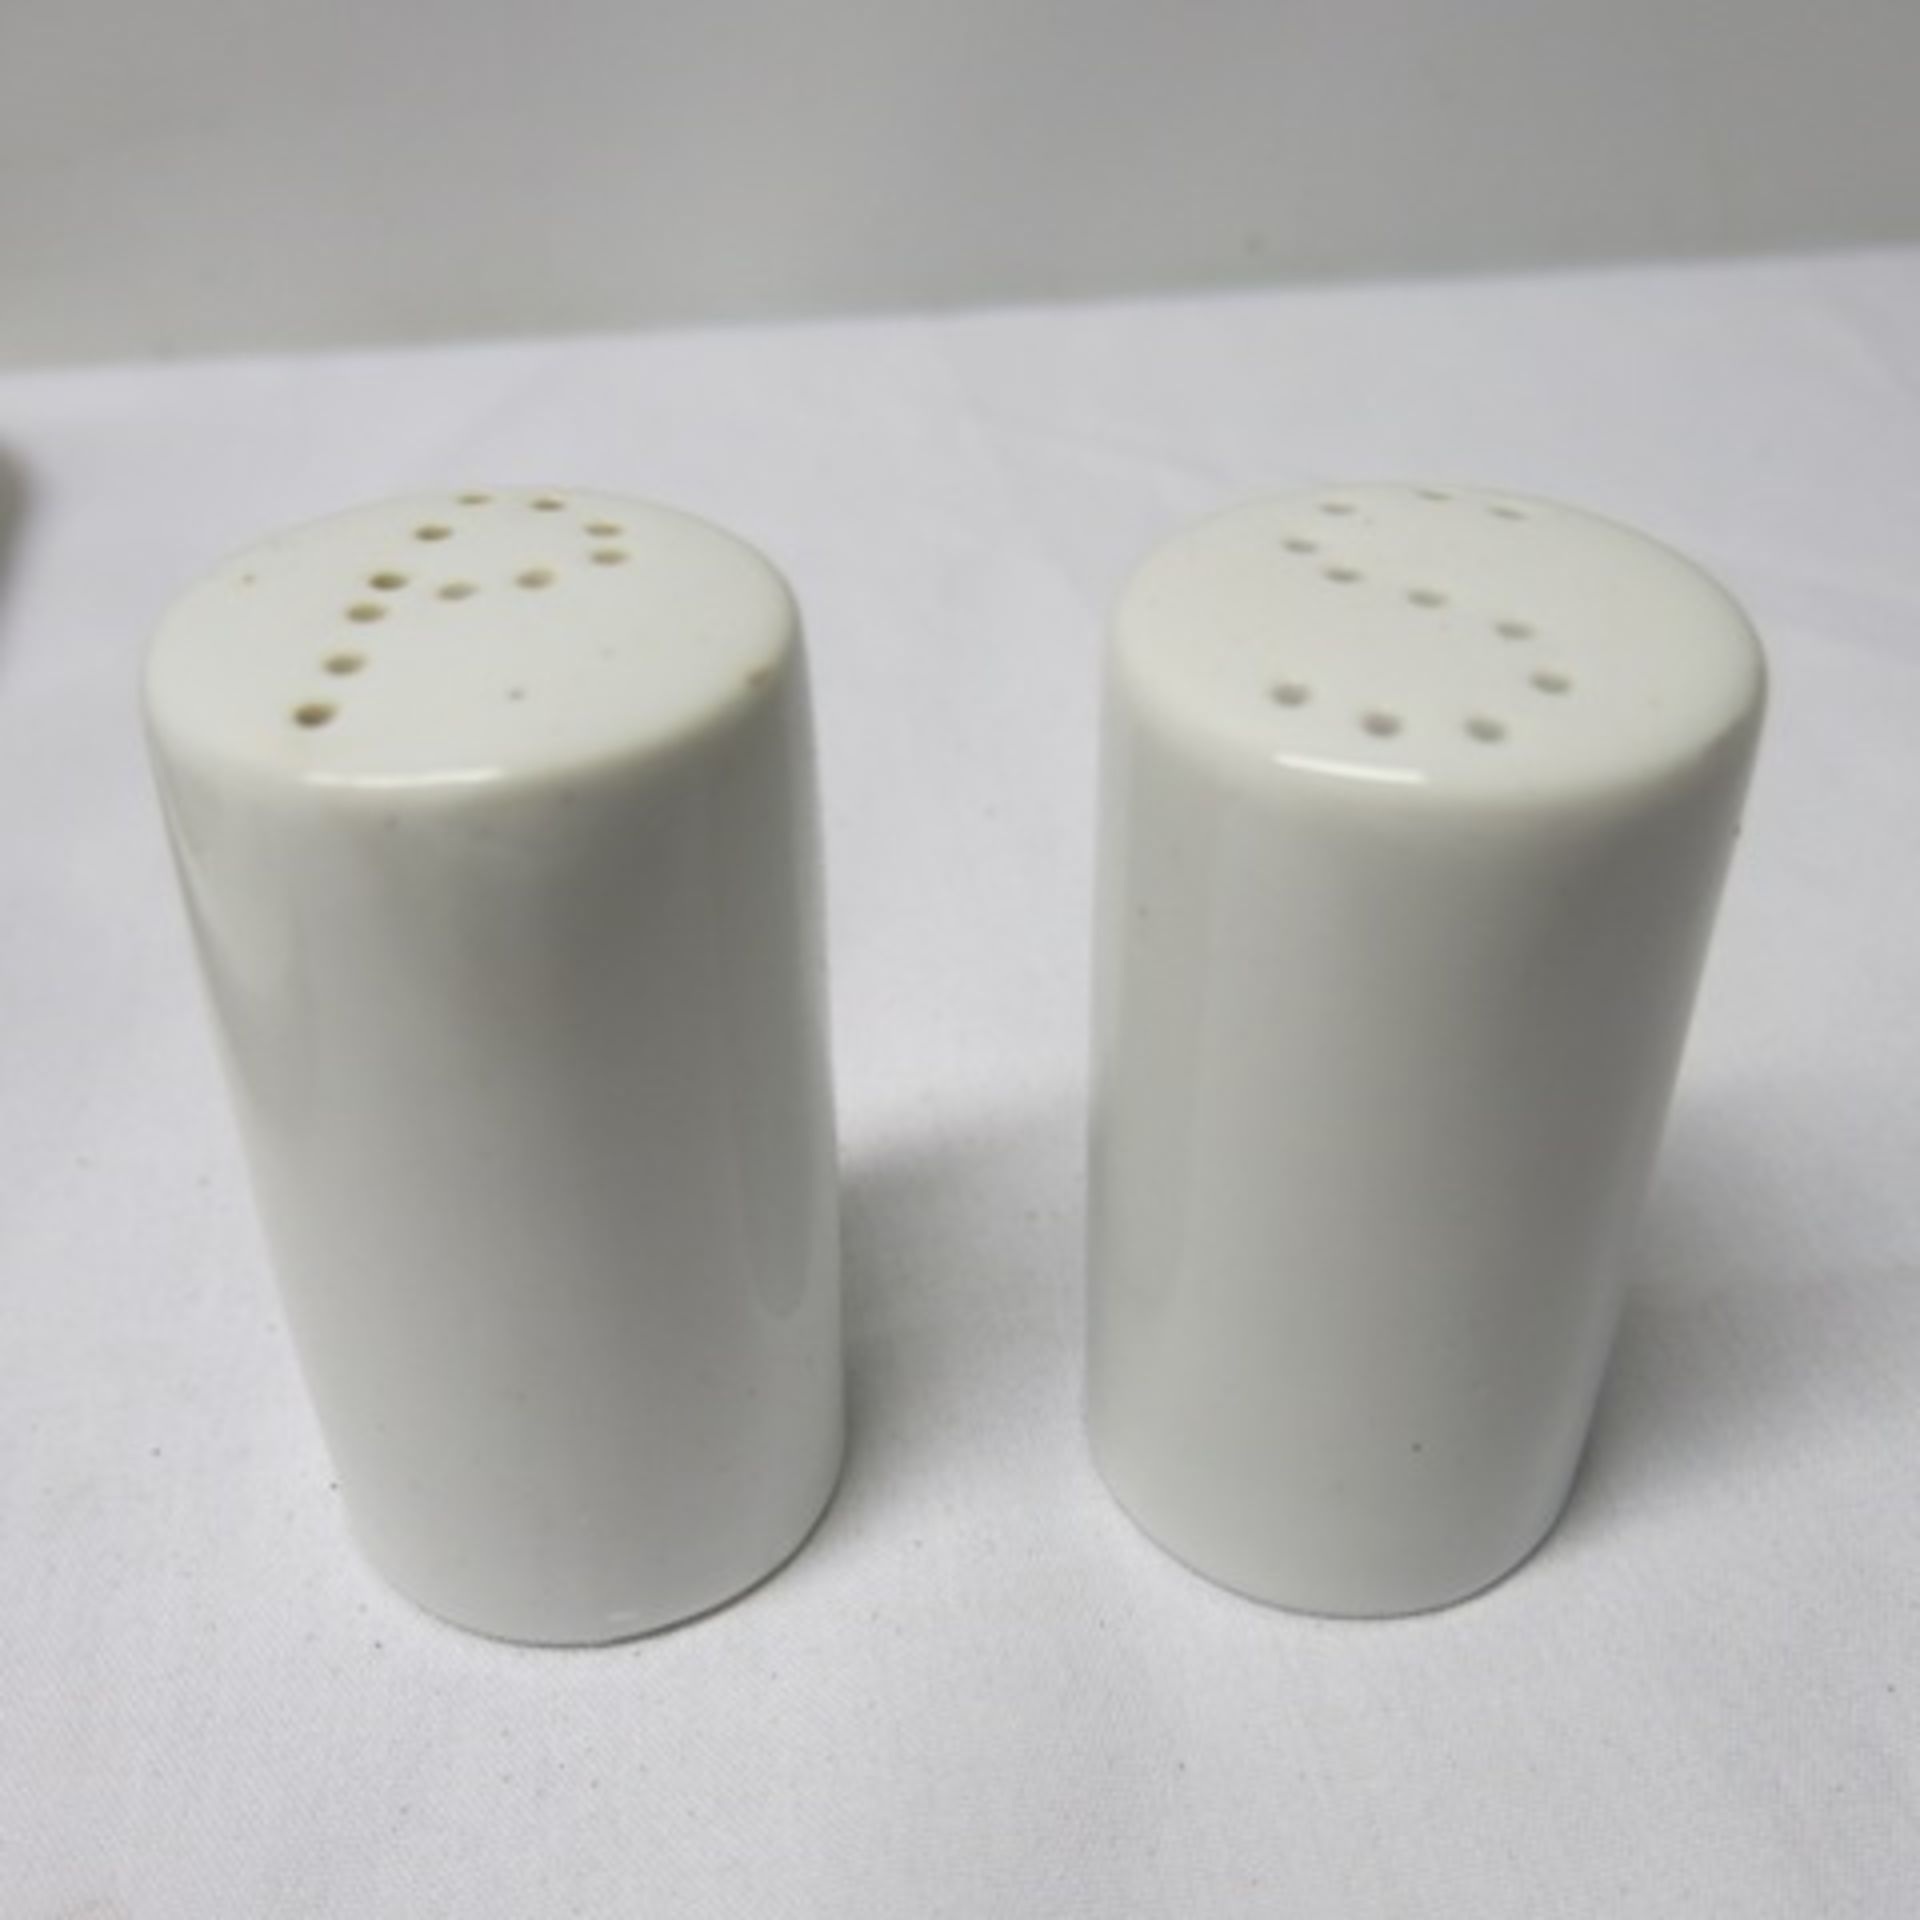 17 x Salt & 15 x Pepper Shakers in White Porcelain - Image 2 of 2